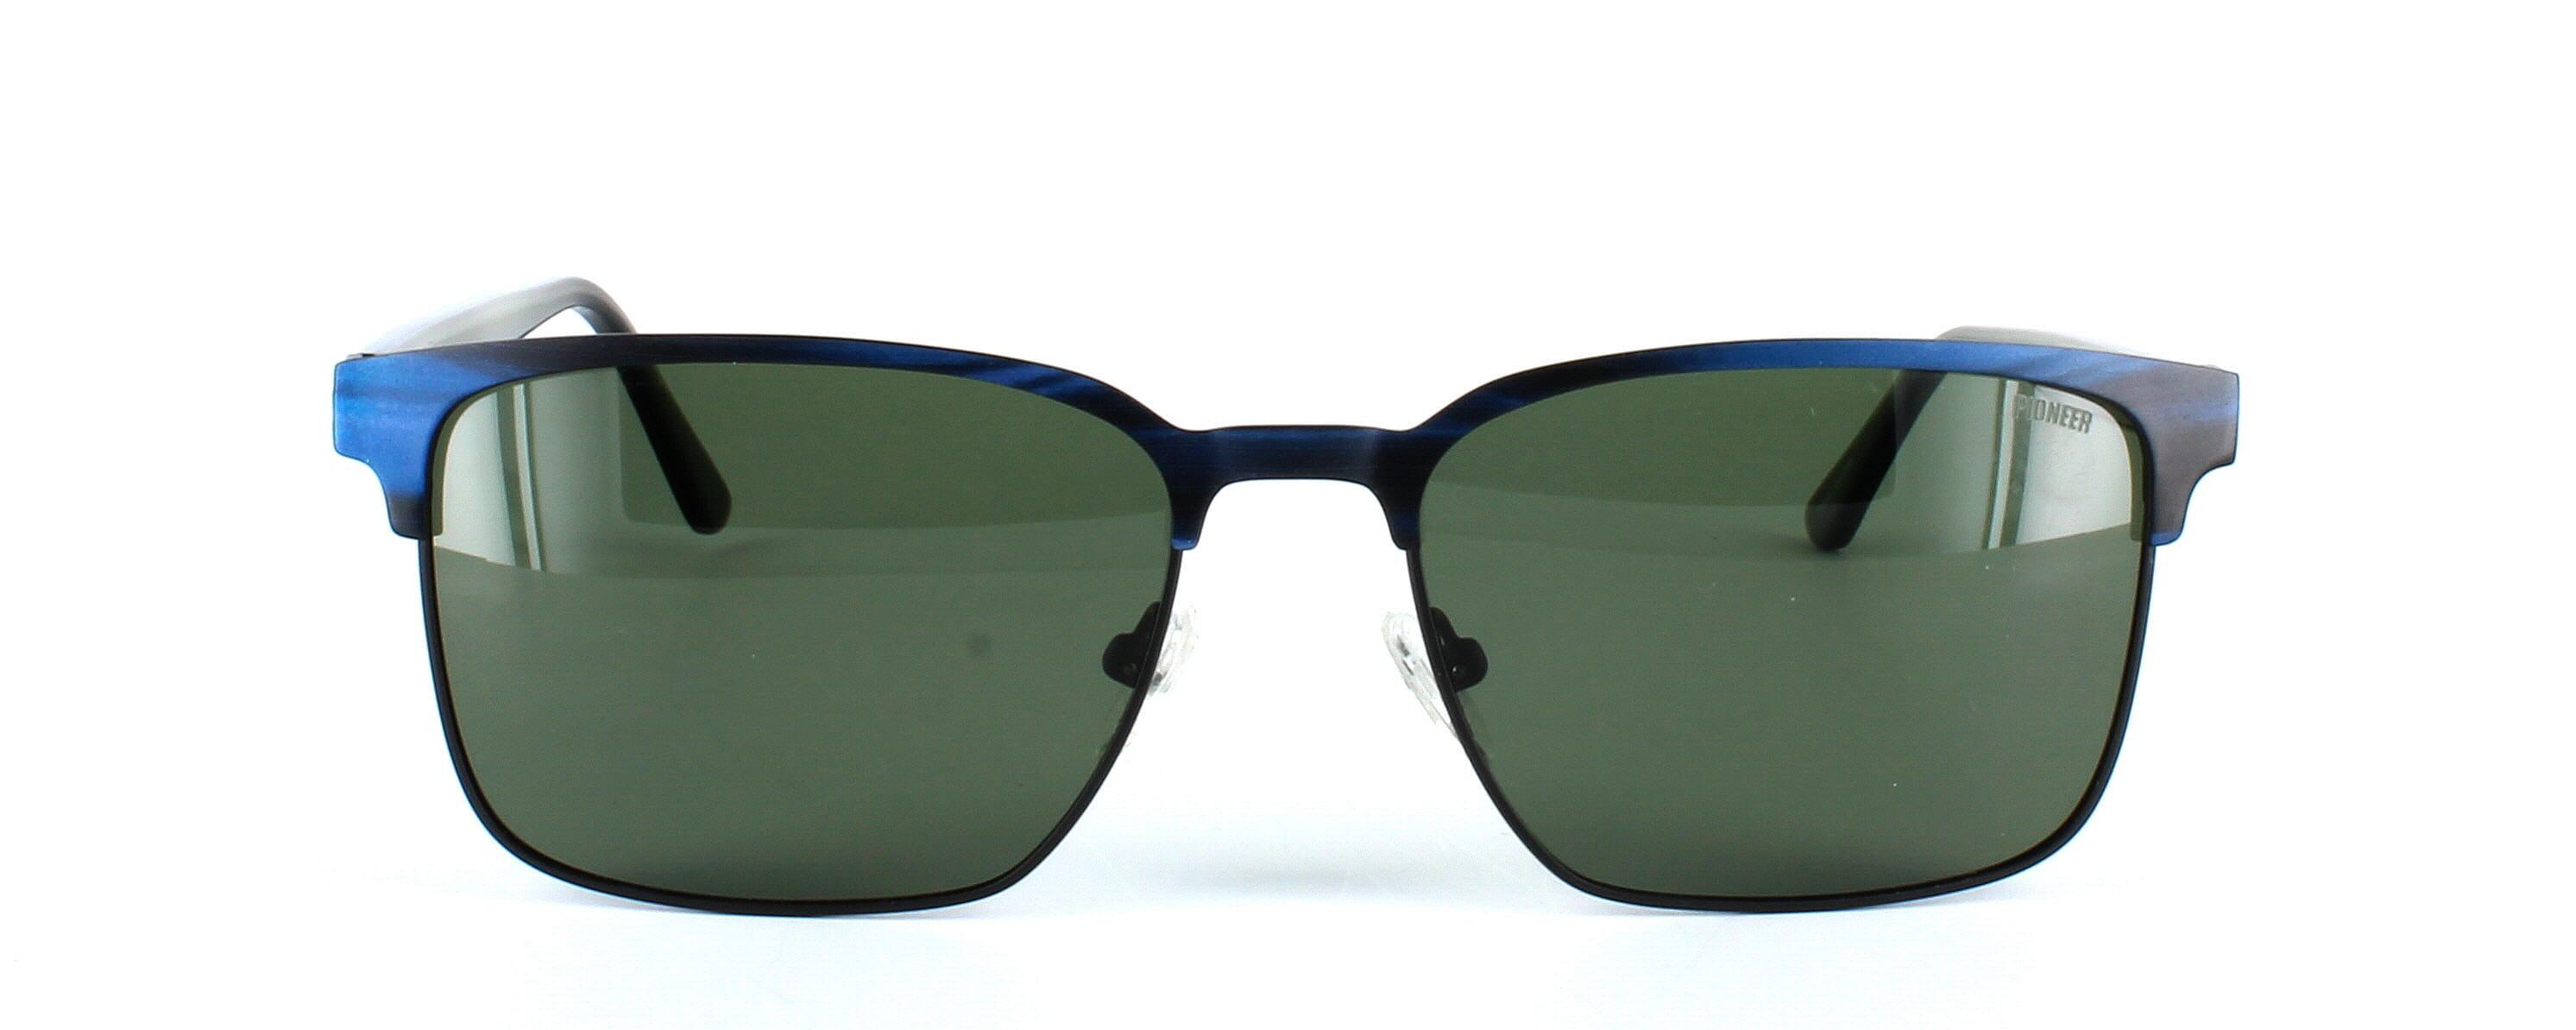 Sorrento - Unisex metal prescription sunglasses - Blue - Image view 2